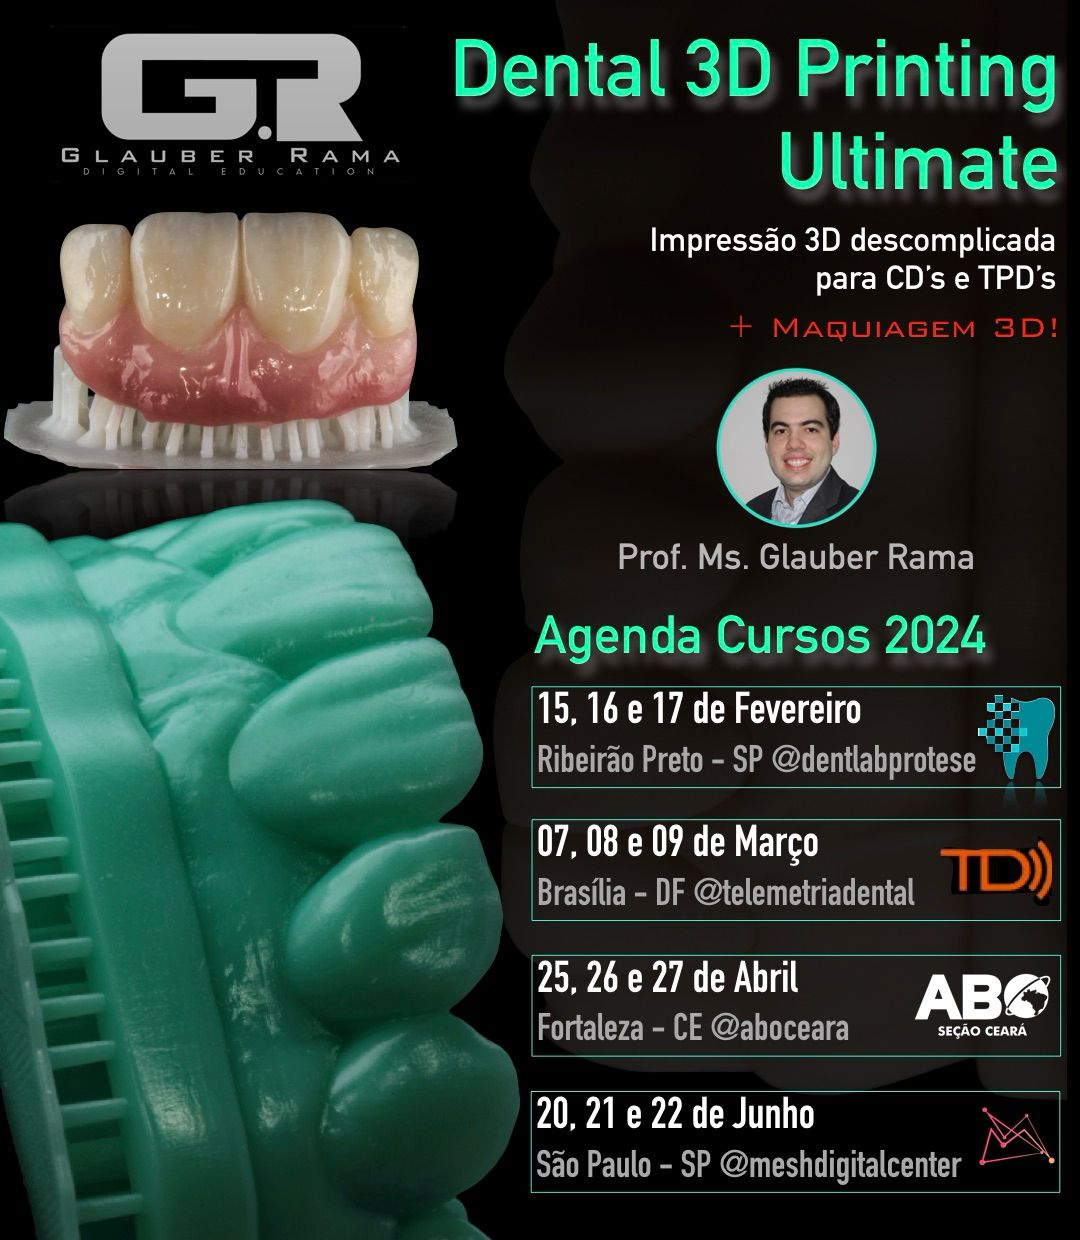 Dental 3D Printing Ultimate - São Paulo